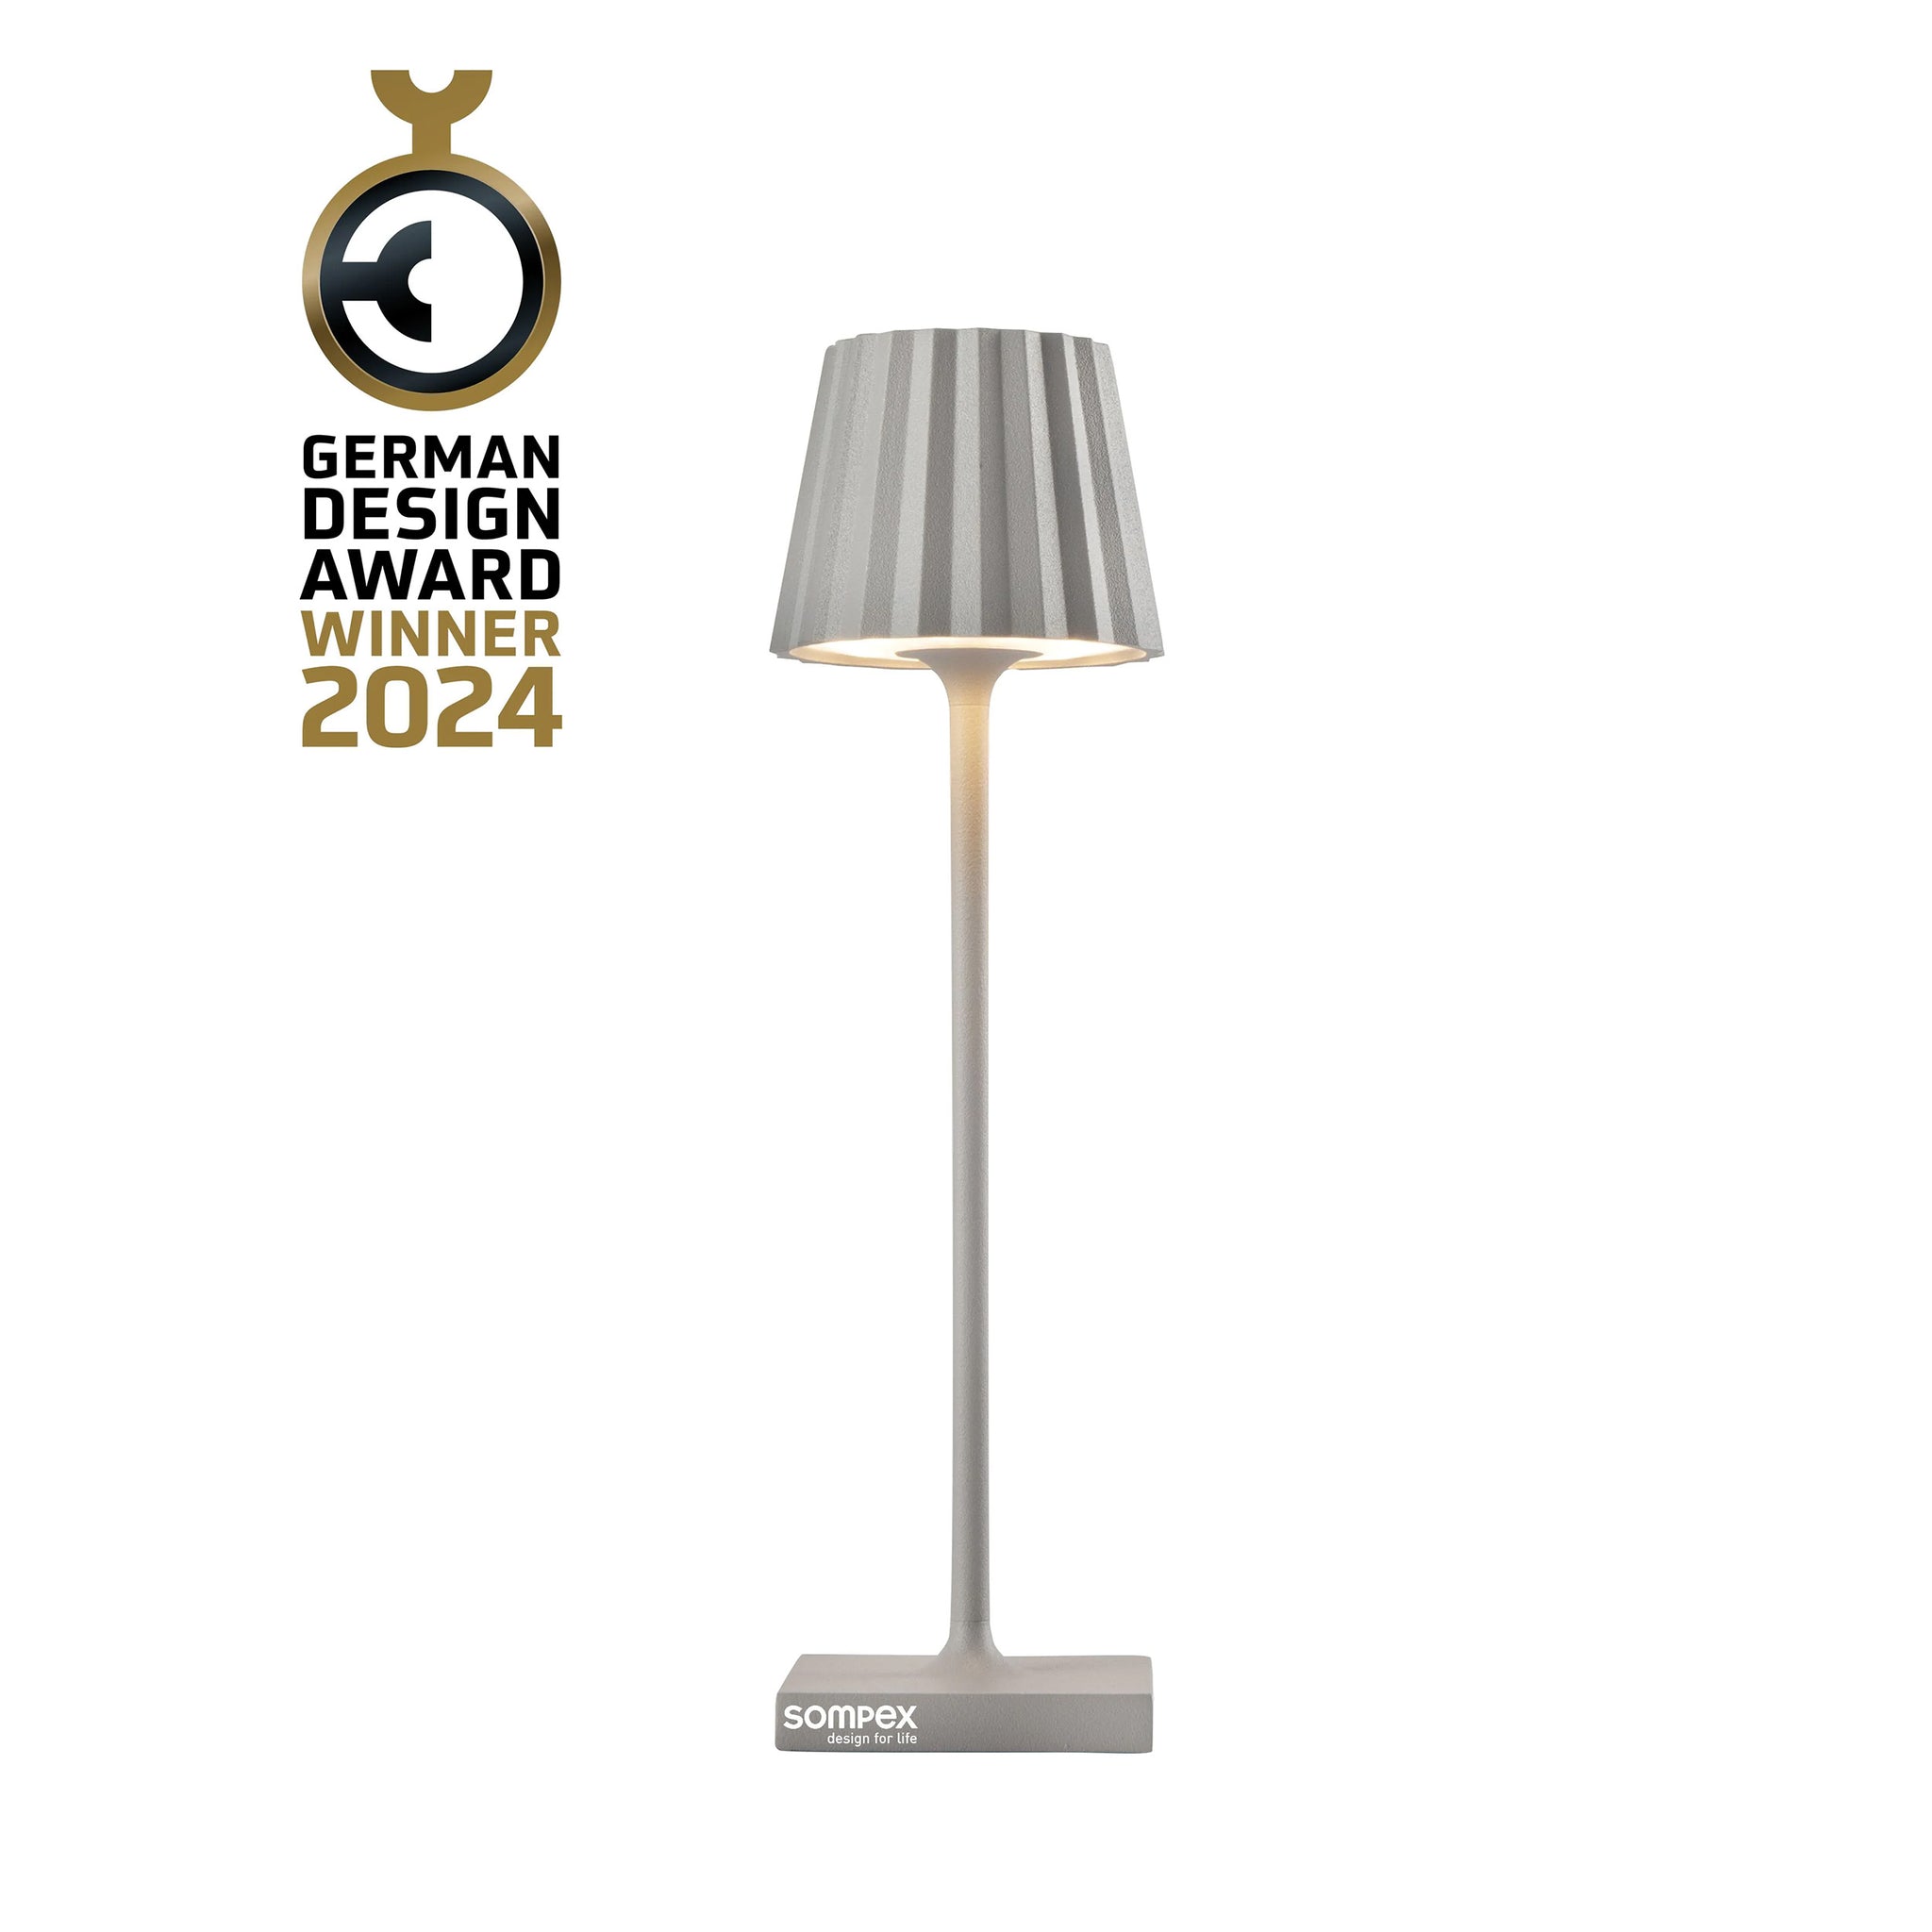 Sompex Troll Nano Grijs│Oplaadbare Tafellamp│Buitenverlichting│art. 78585│logo German Design Award Winner 2024